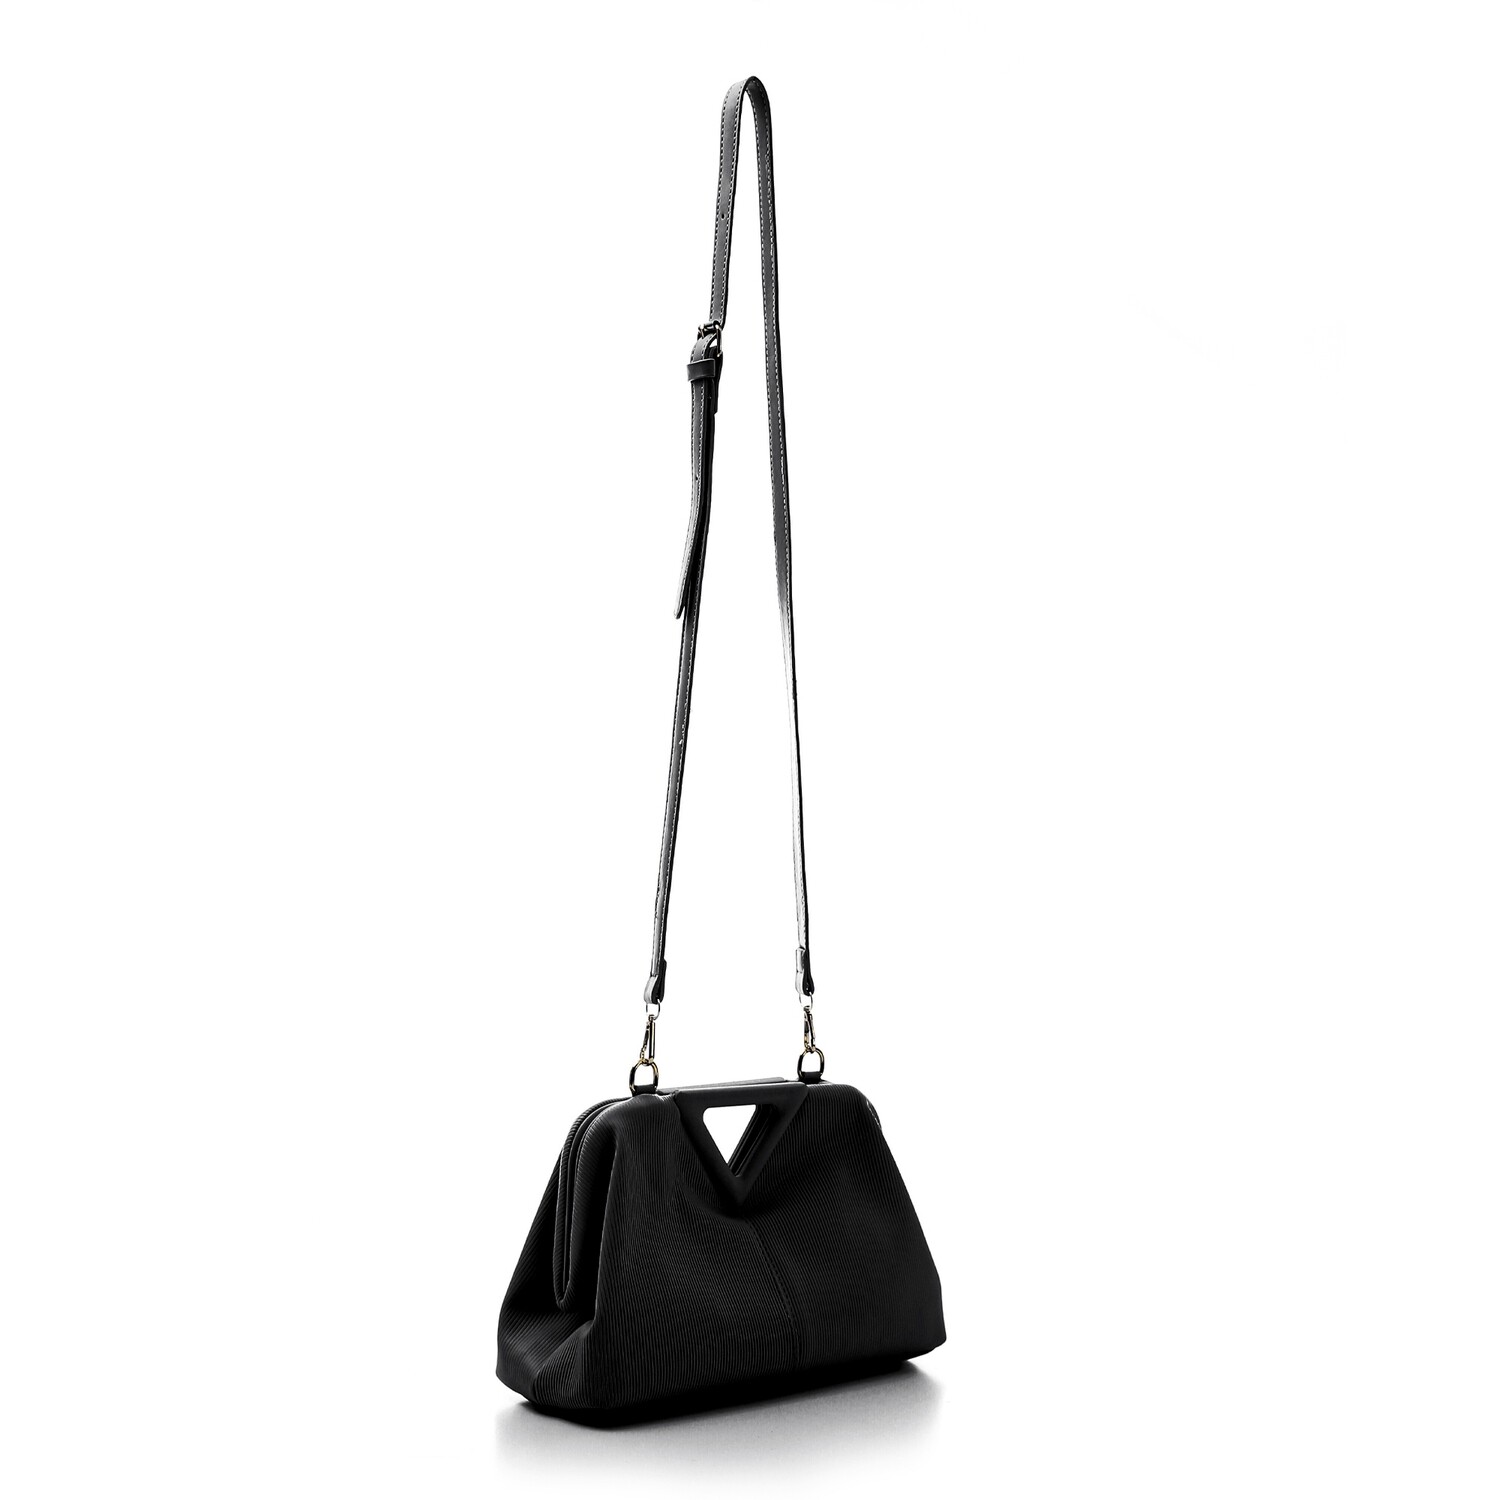 Ribbed Leather Fashionable Handbag - Black-4980